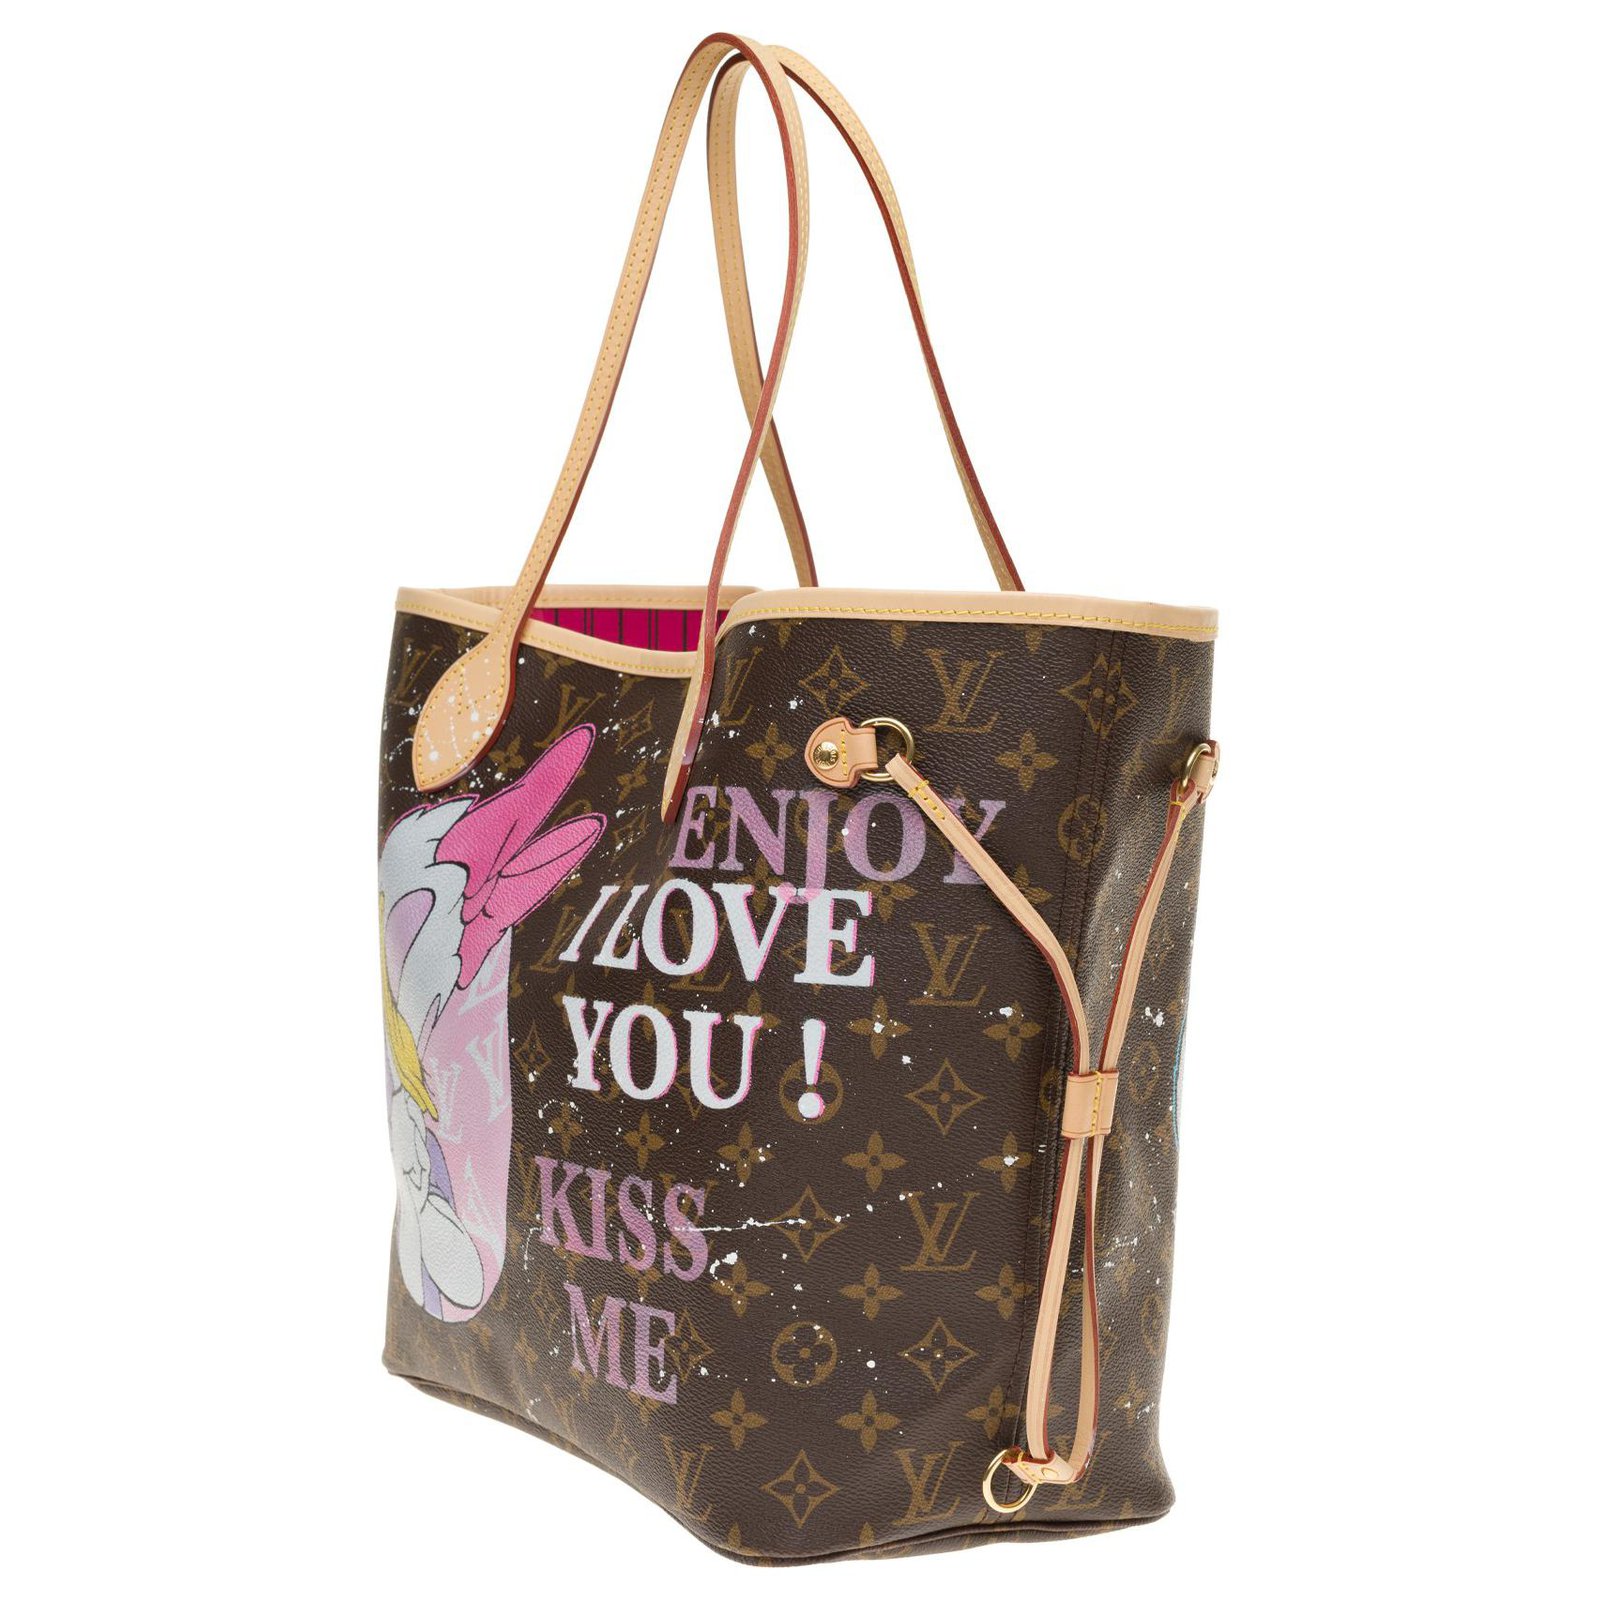 Everyday bag : r/Louisvuitton